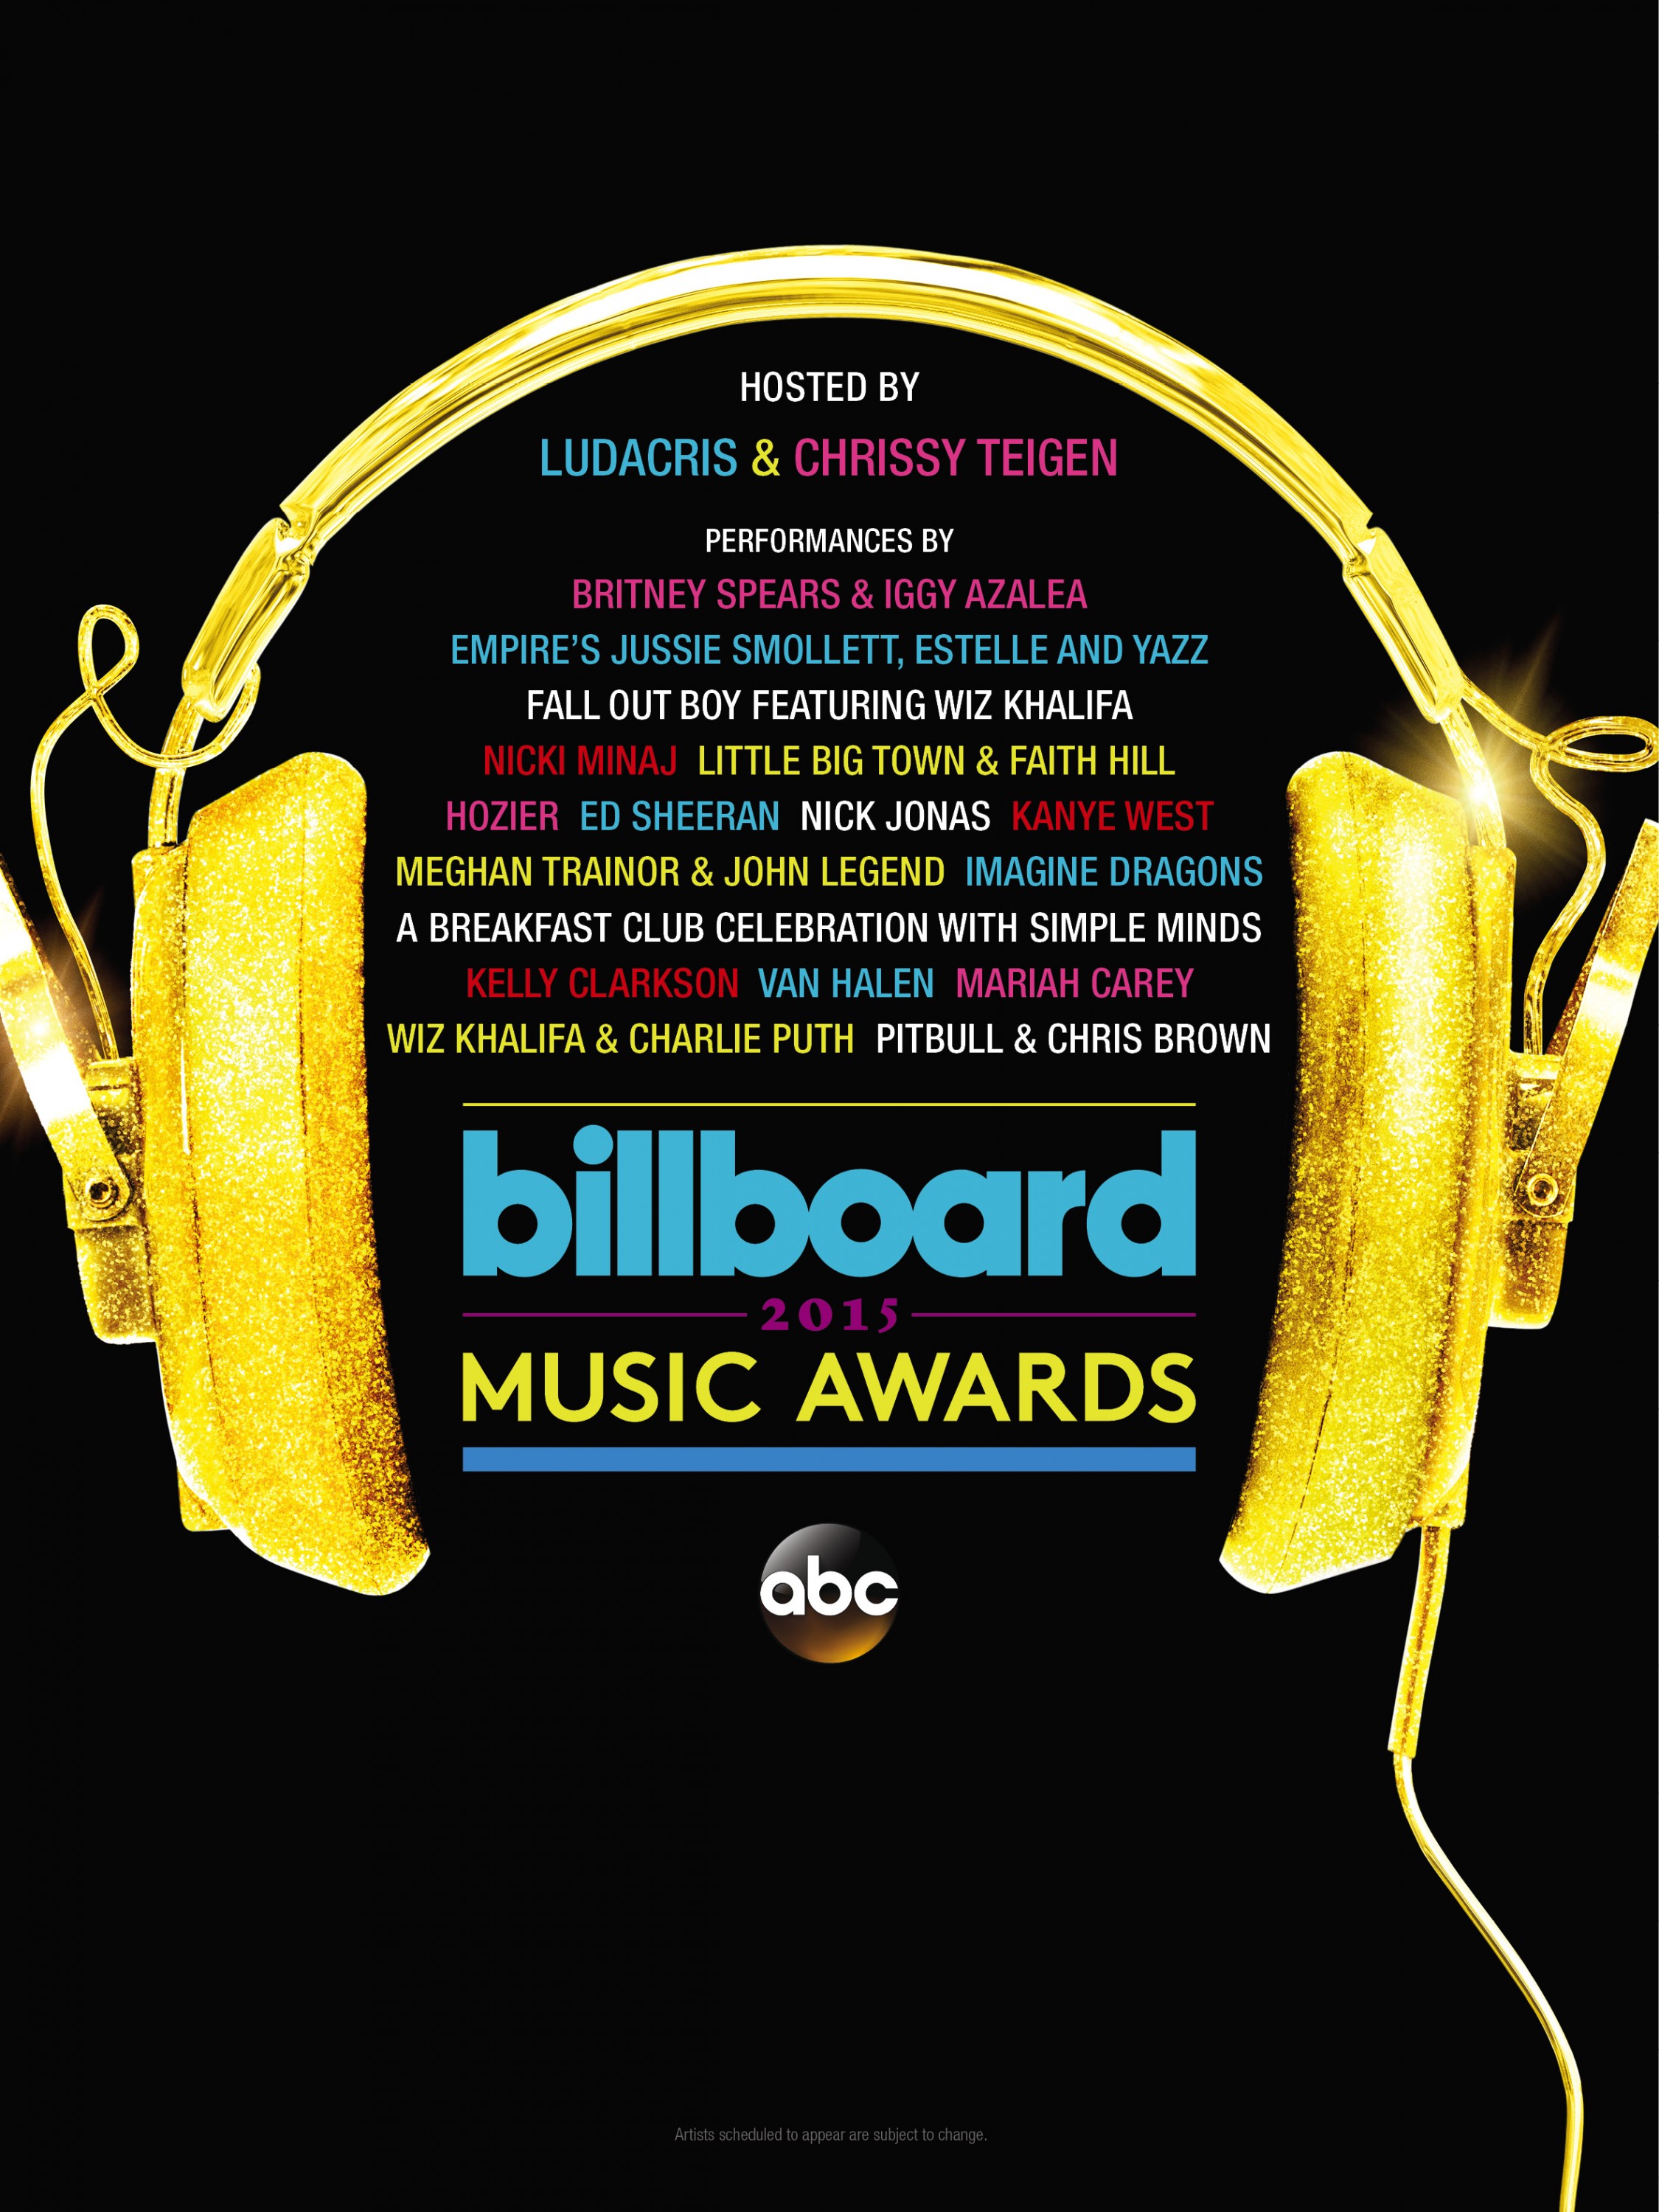 Mega Sized TV Poster Image for 2015 Billboard Music Awards (#3 of 7)